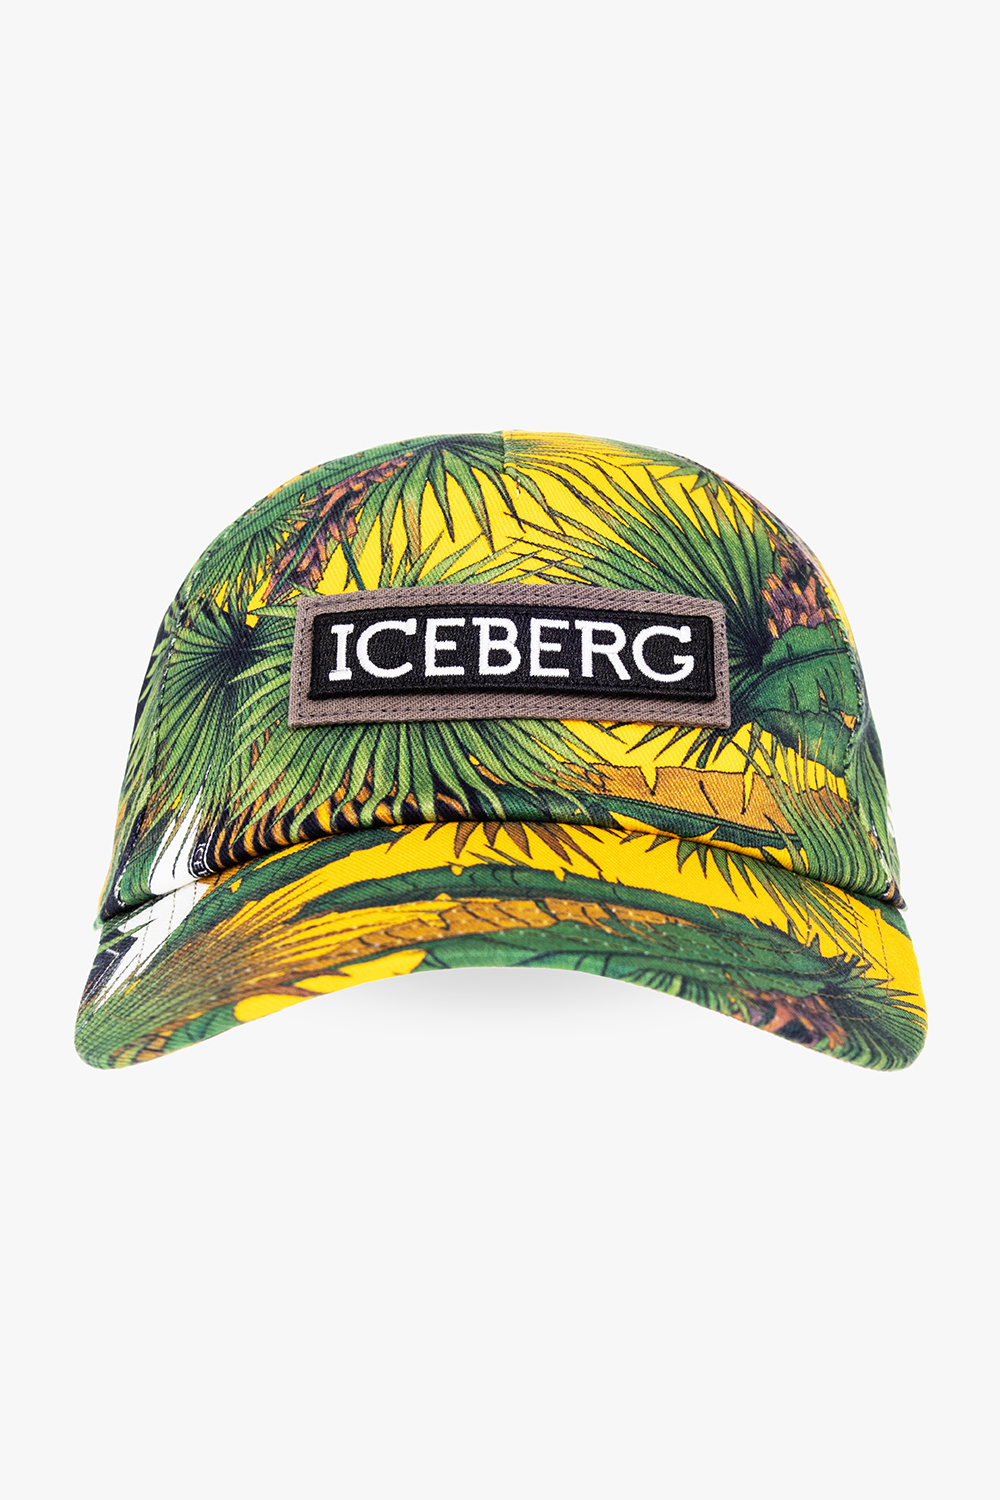 Iceberg clothing caps pens men